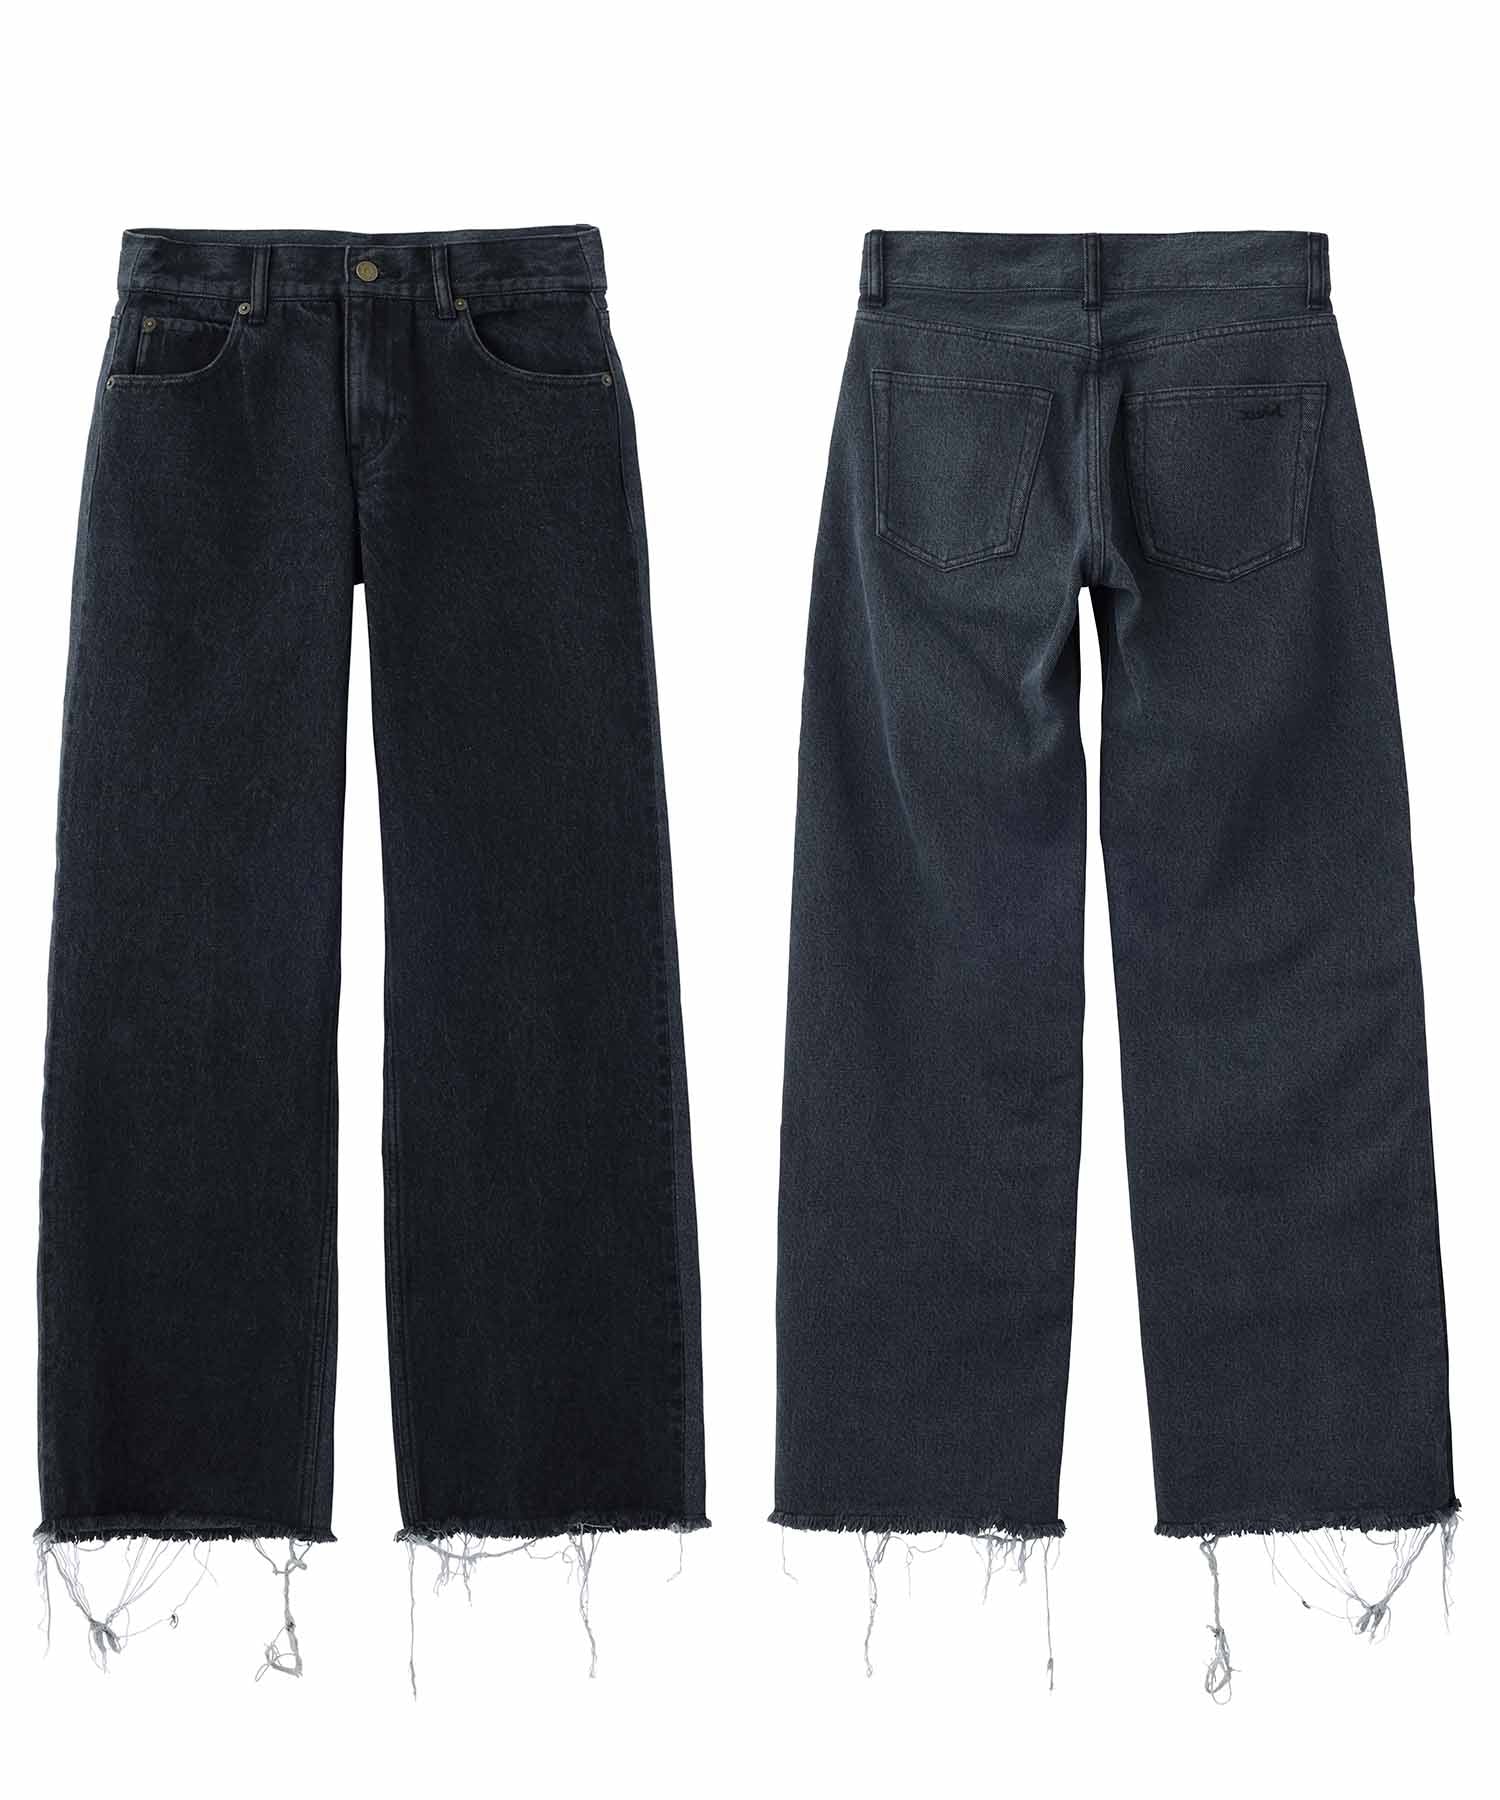 Zara Men's Paint Splatter Patch SKINNY Jeans Us30 Grey 6855/300 Denim Pants  for sale online | eBay